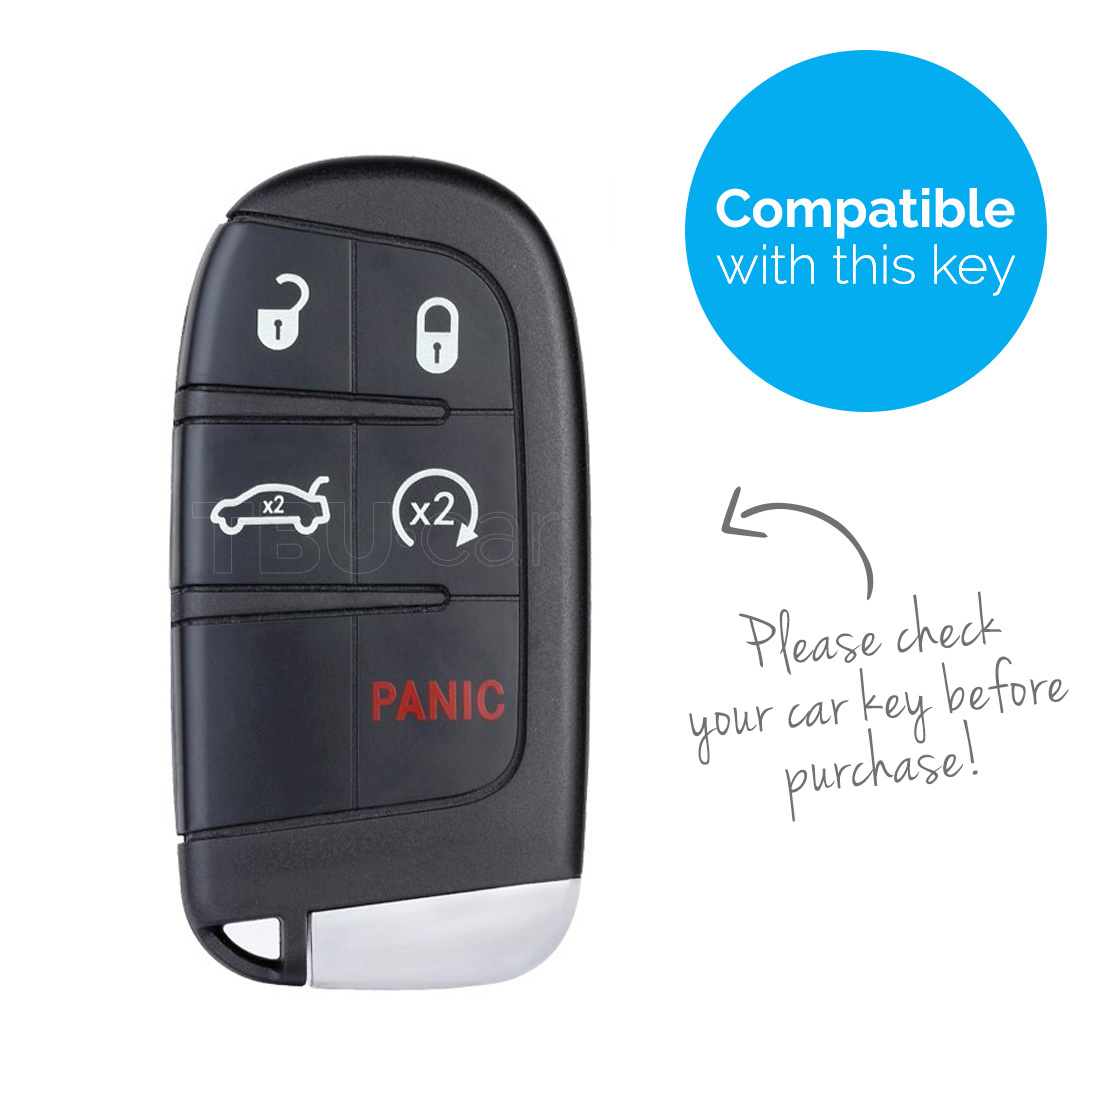 TBU car TBU car Car key cover compatible with Fiat - Silicone Protective Remote Key Shell - FOB Case Cover - Black